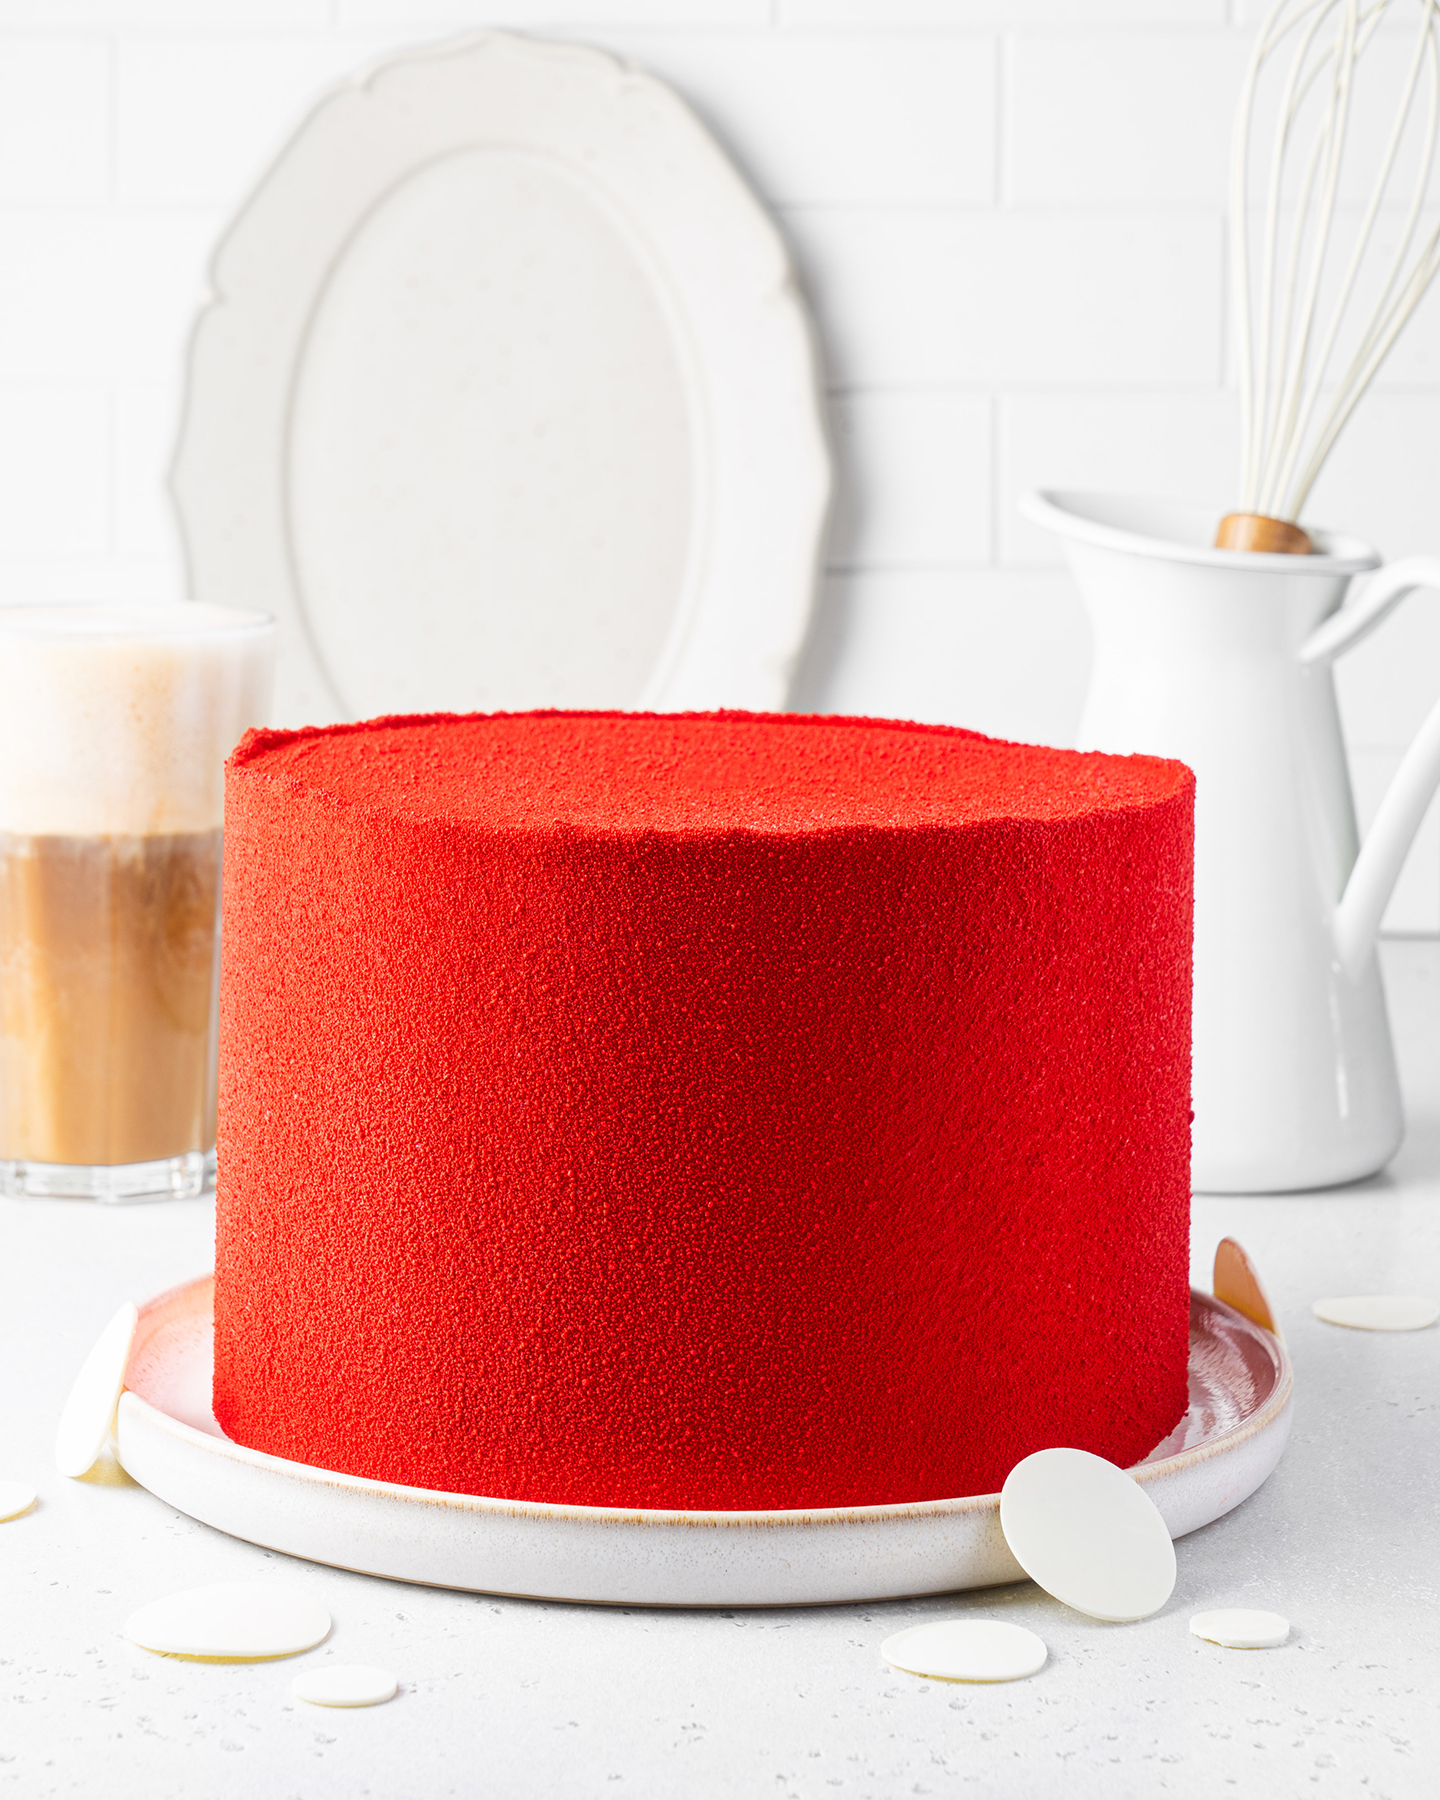 Торт «Красный бархат» от Andy Chef. Рецепт | Recipe | Desserts, Summer party desserts, Food